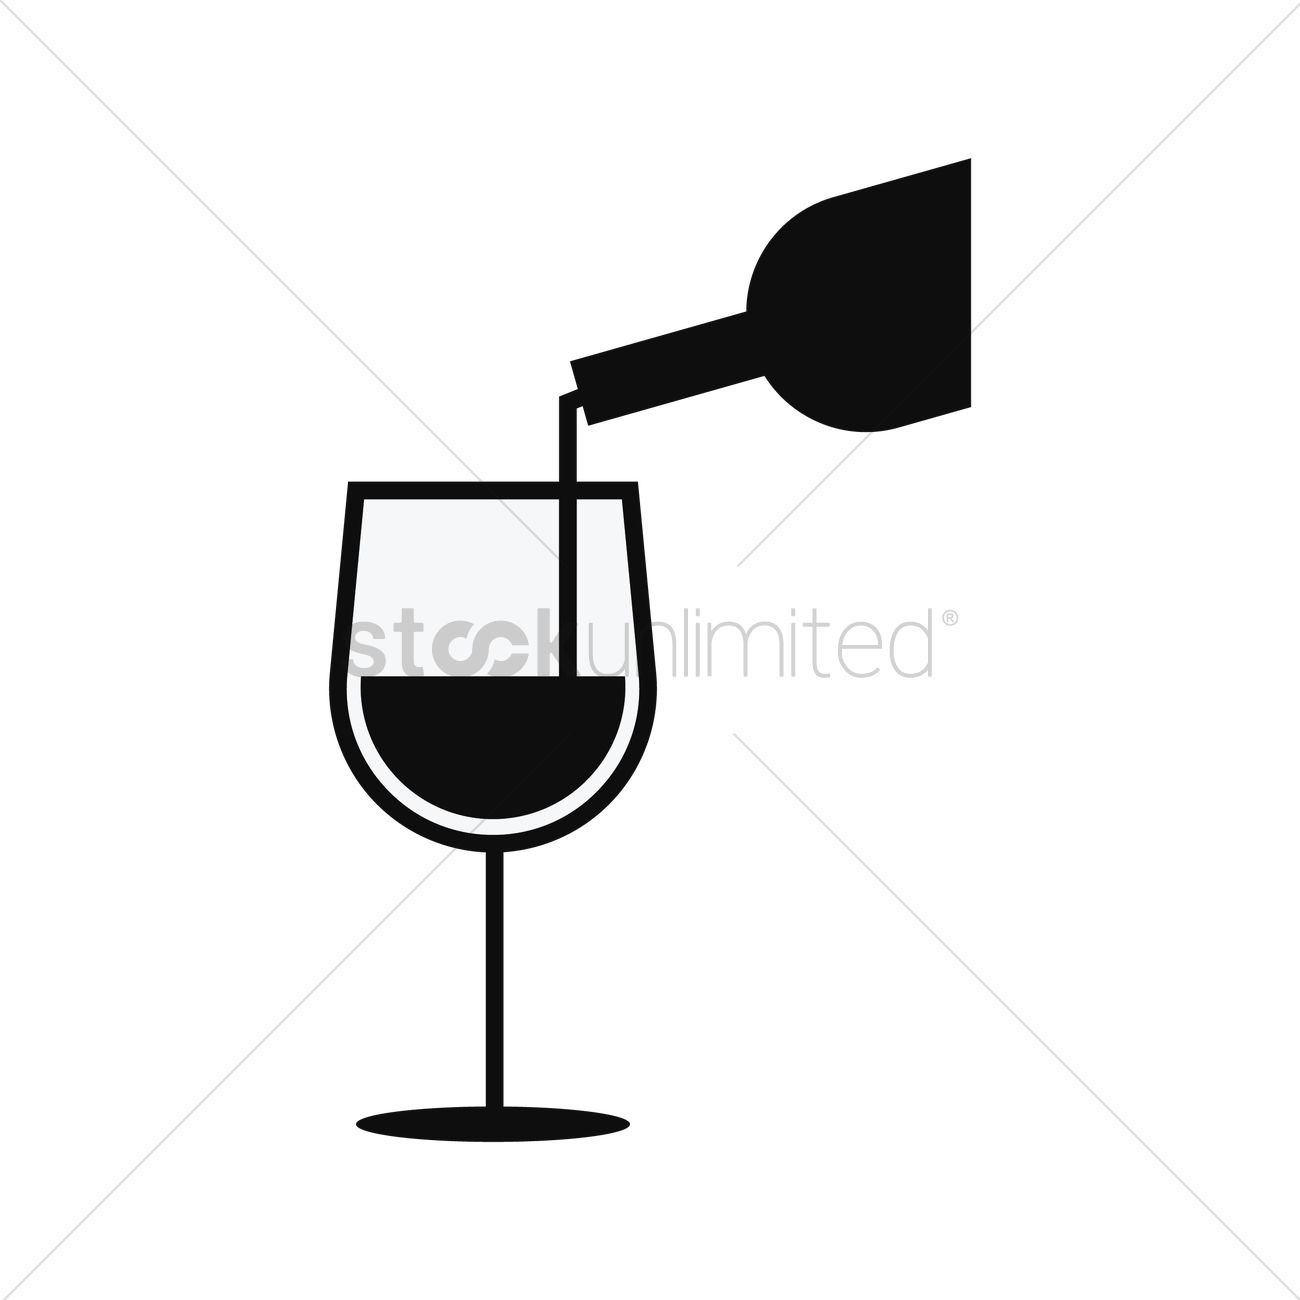 pouring wine into a glass clip art